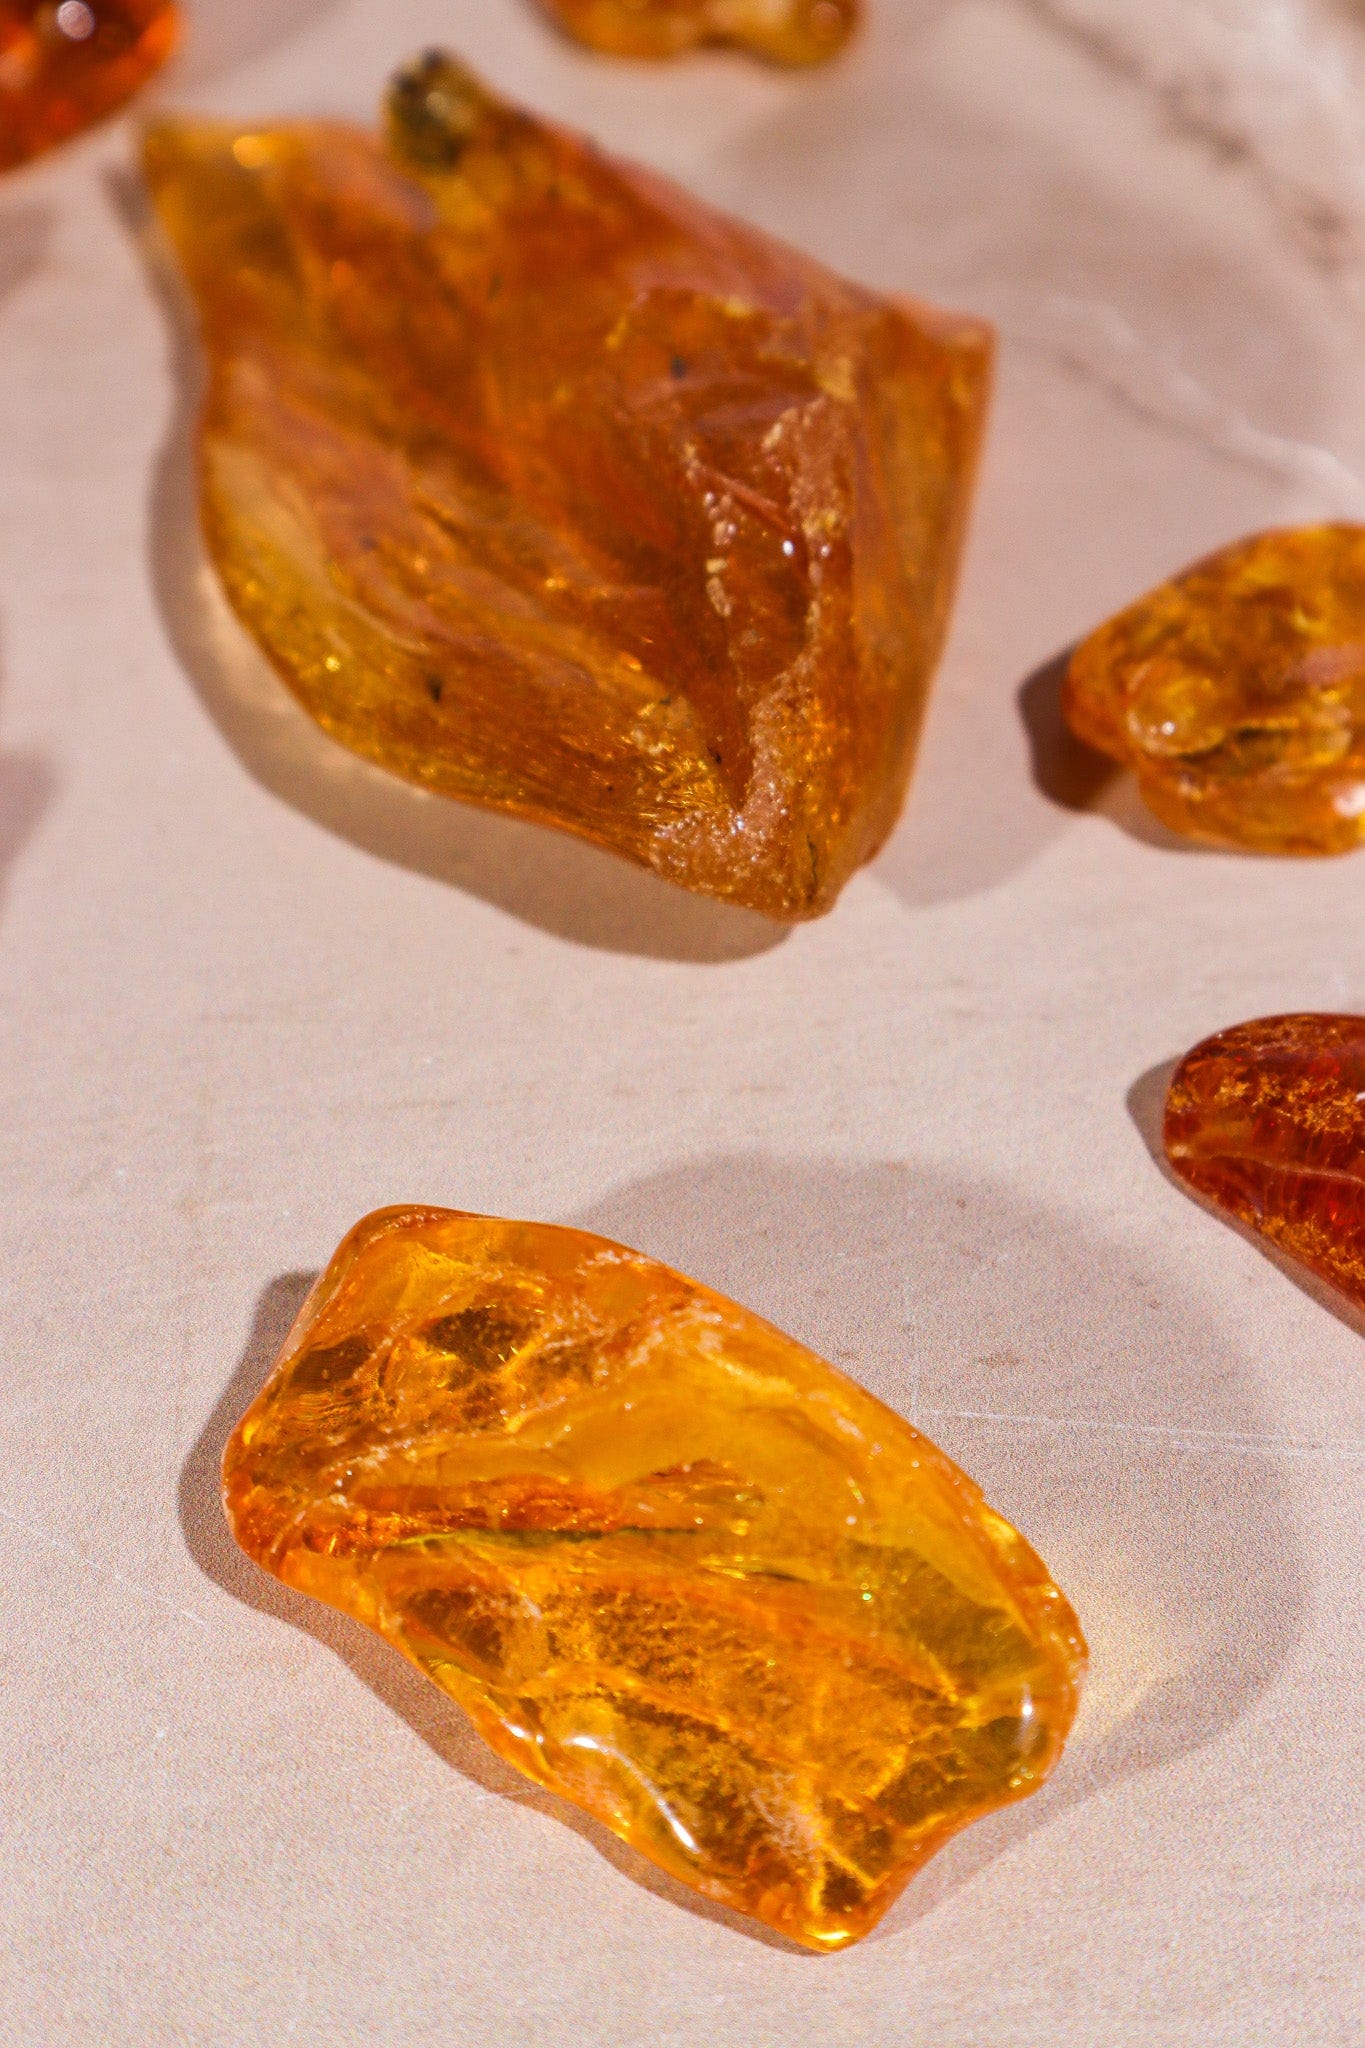 Amber 4.6gr India Rough Crystals Tali & Loz Crystals